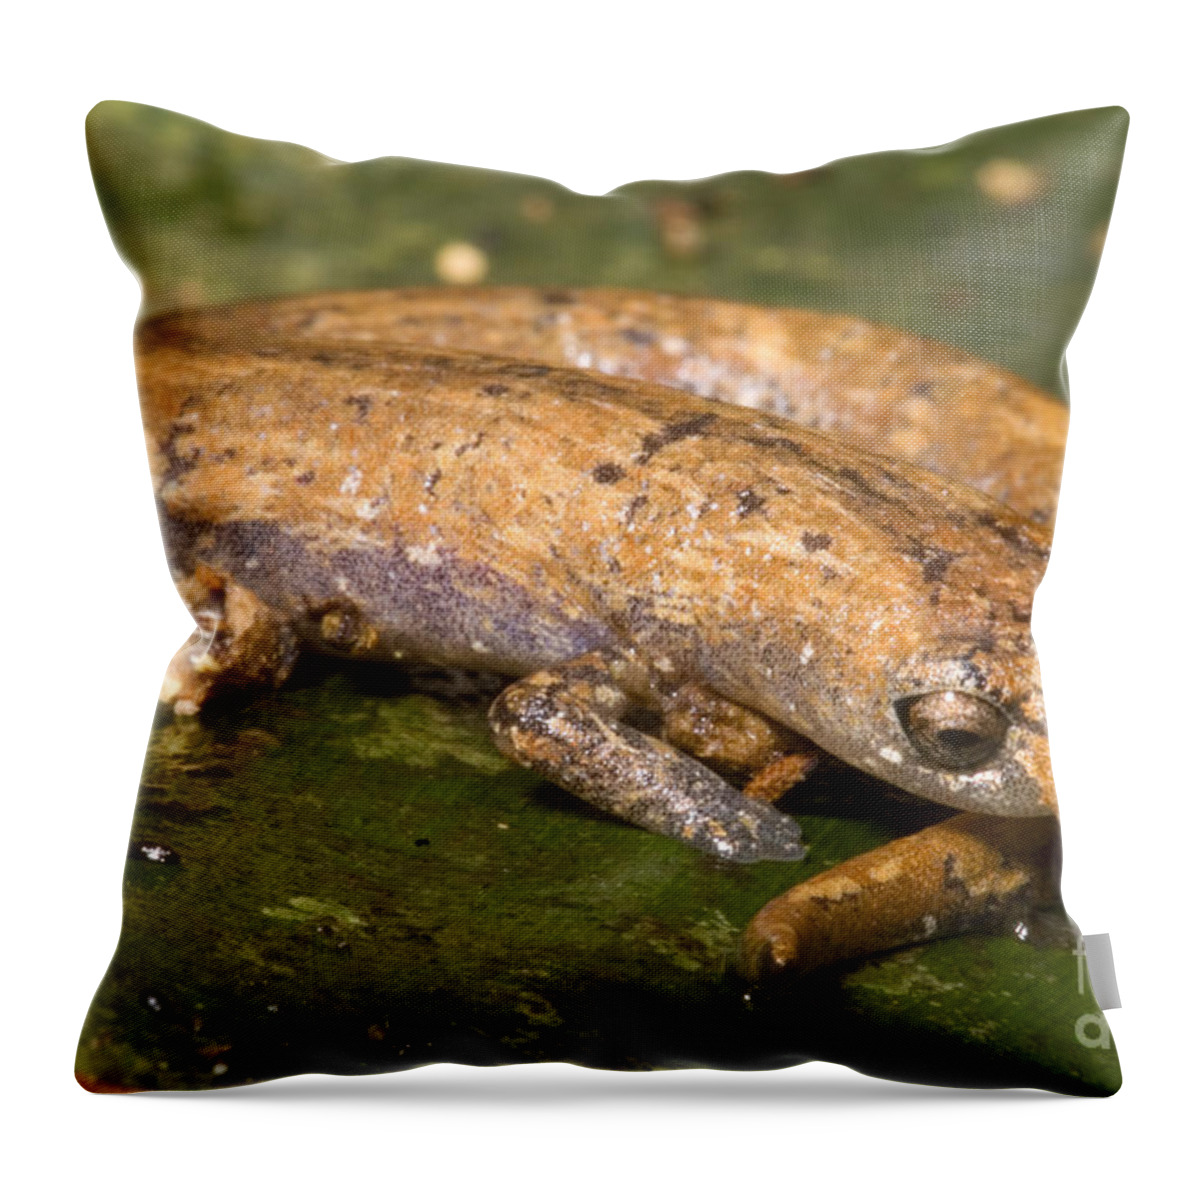 Bolitoglossine Throw Pillow featuring the photograph Bolitoglossine Salamander by Dante Fenolio